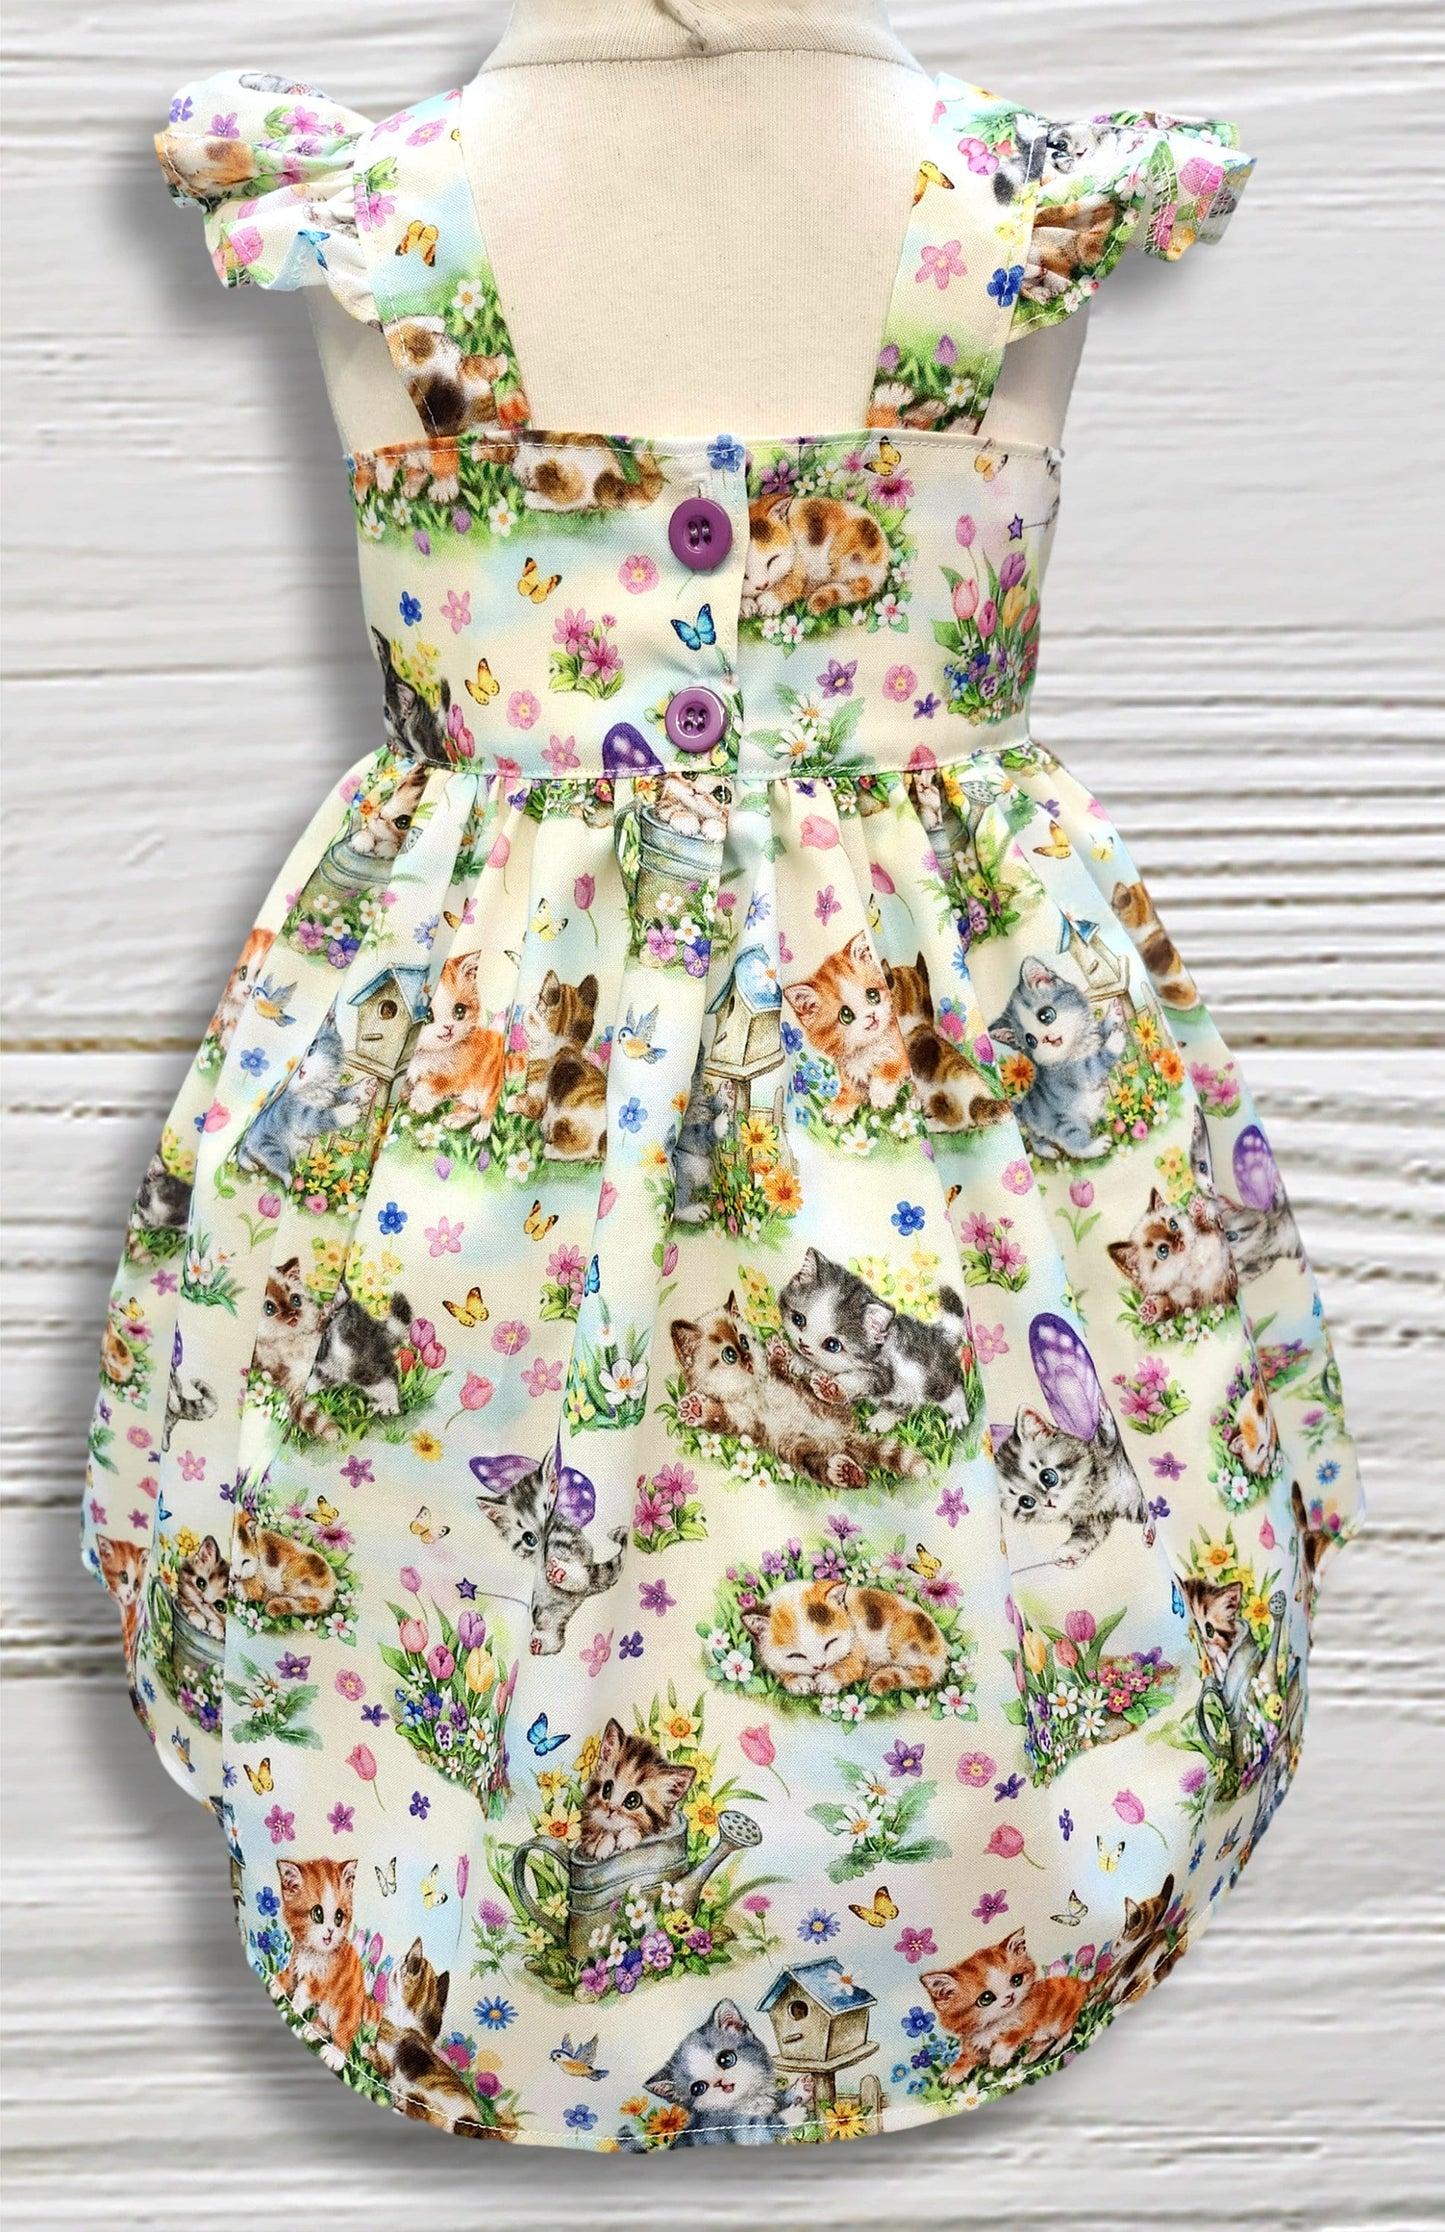 Kitten dress for girl, Cats birthday dress, Kitten tank twirl dress, Summer sundress, Girls Cat dress, Toddler kitten dress.